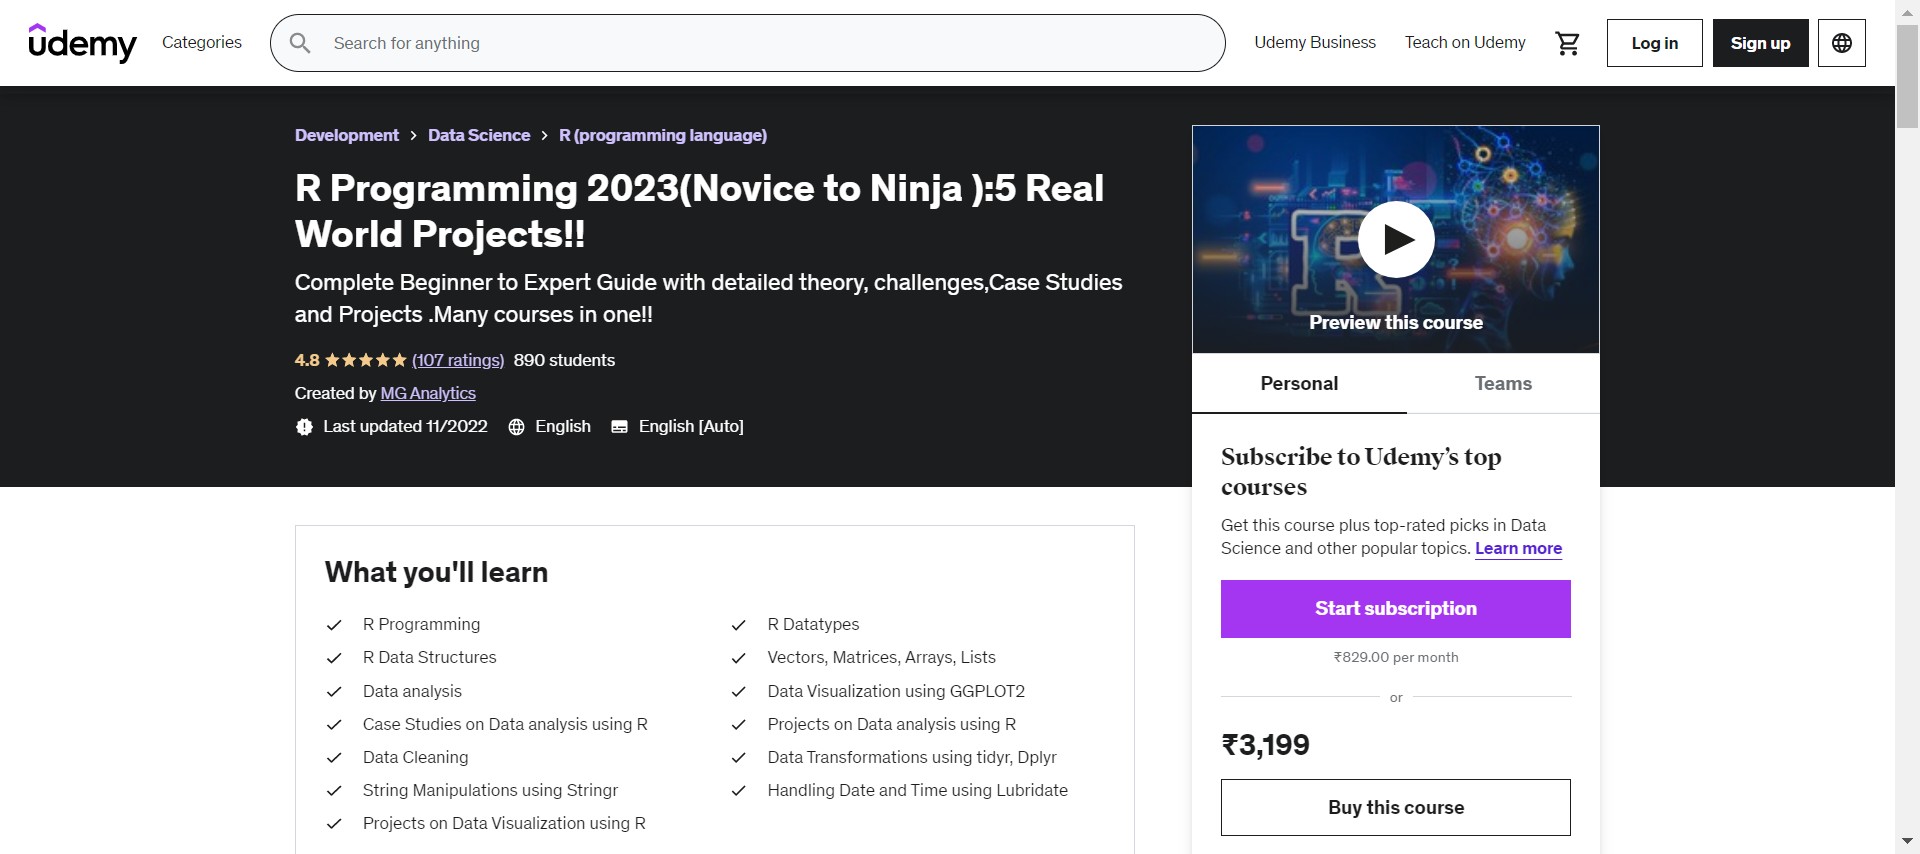 R Programming 2023(Novice to Ninja) 5 Real World Projects